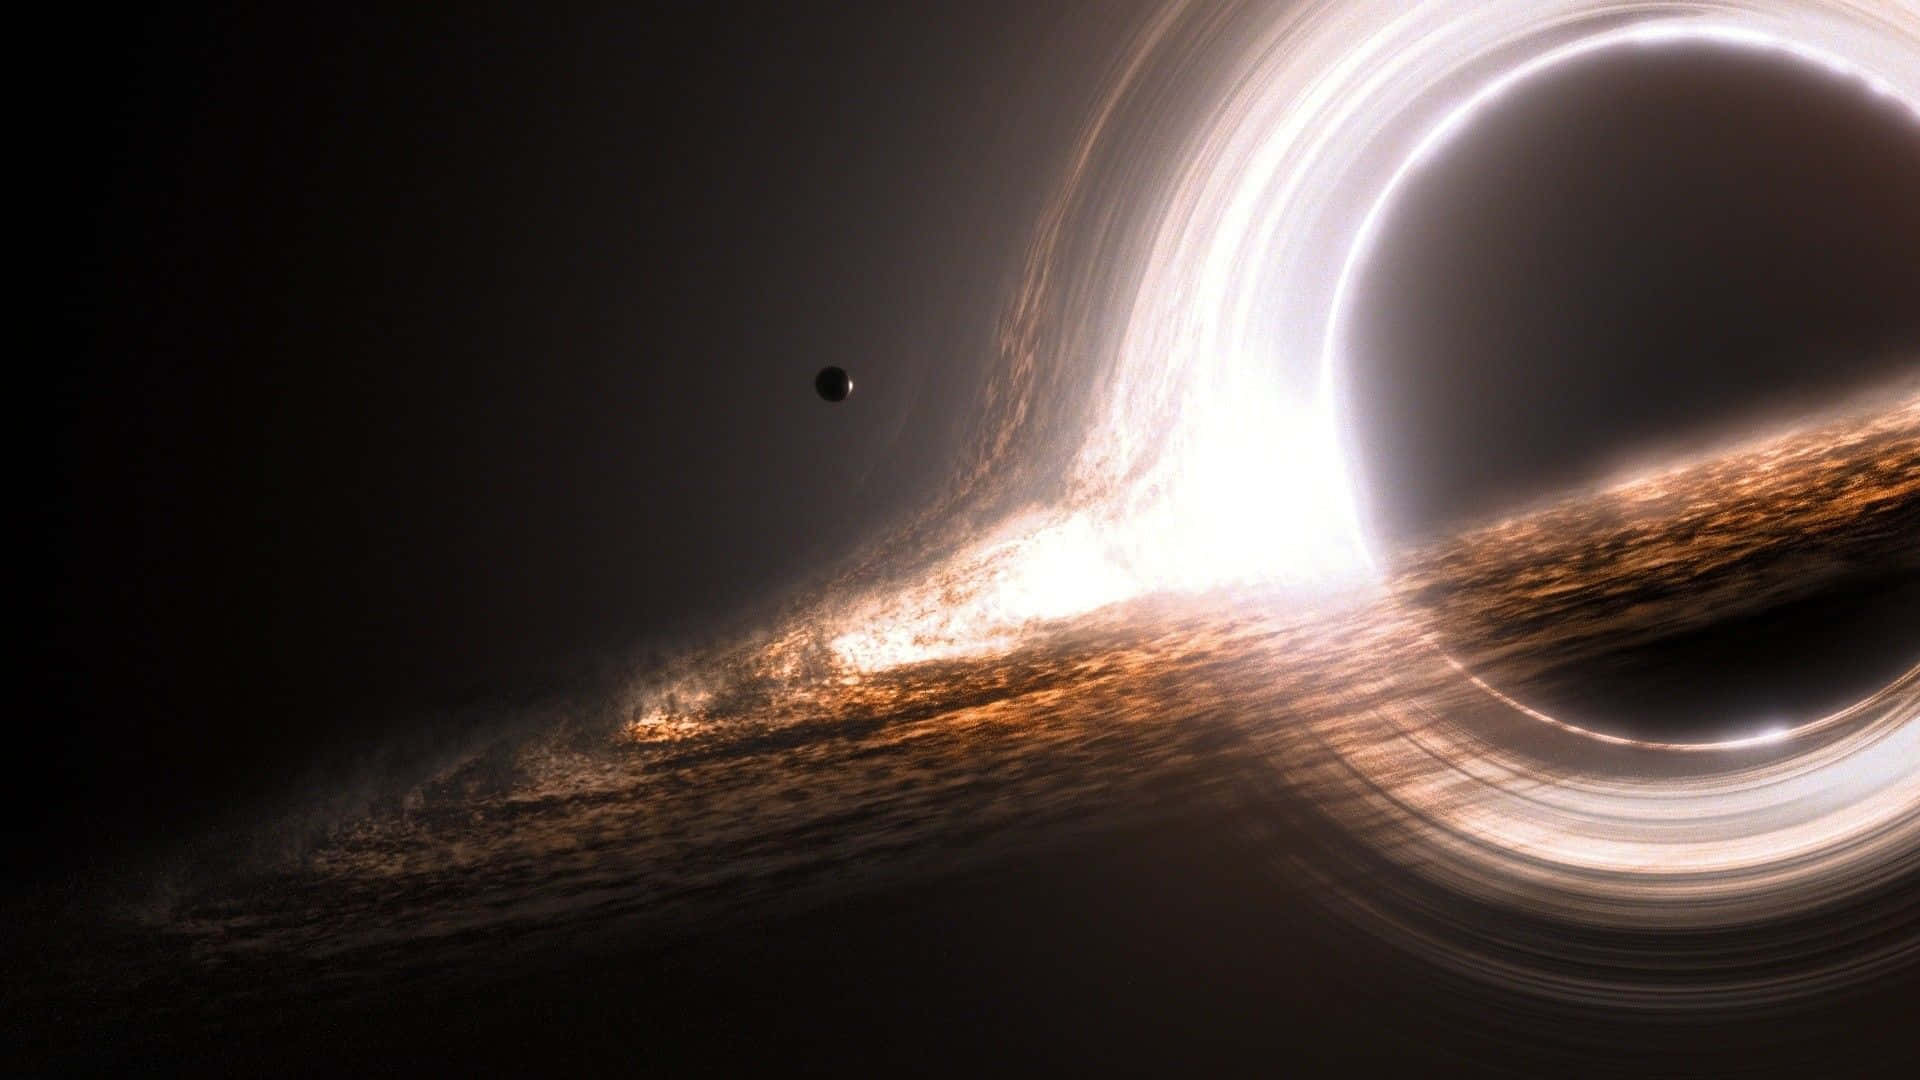 A breathtaking view of the Interstellar Black Hole Wallpaper